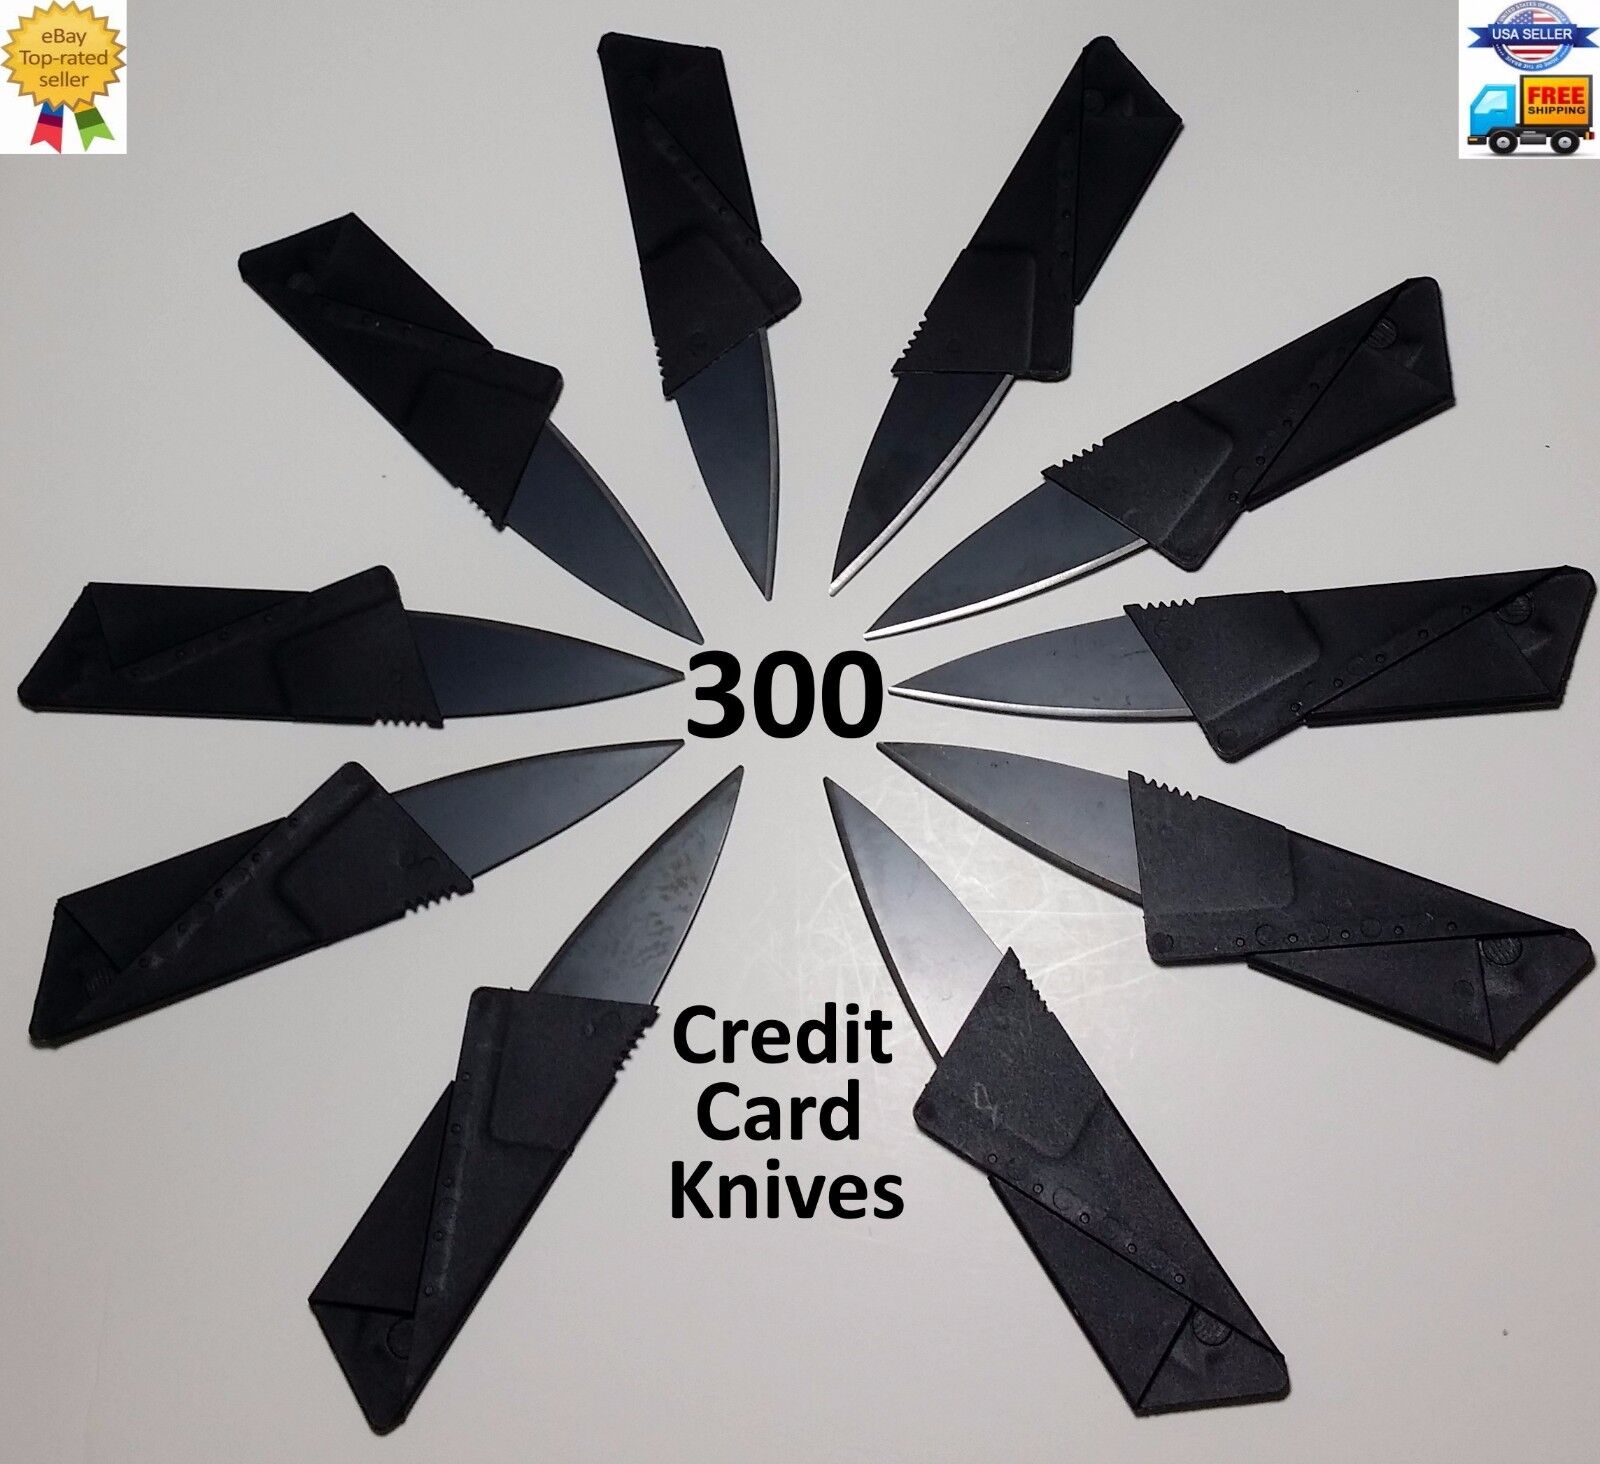 300x Credit Card Knives folding wallet thin pocket Survival sharp micro knife Credit Card Knife Classic